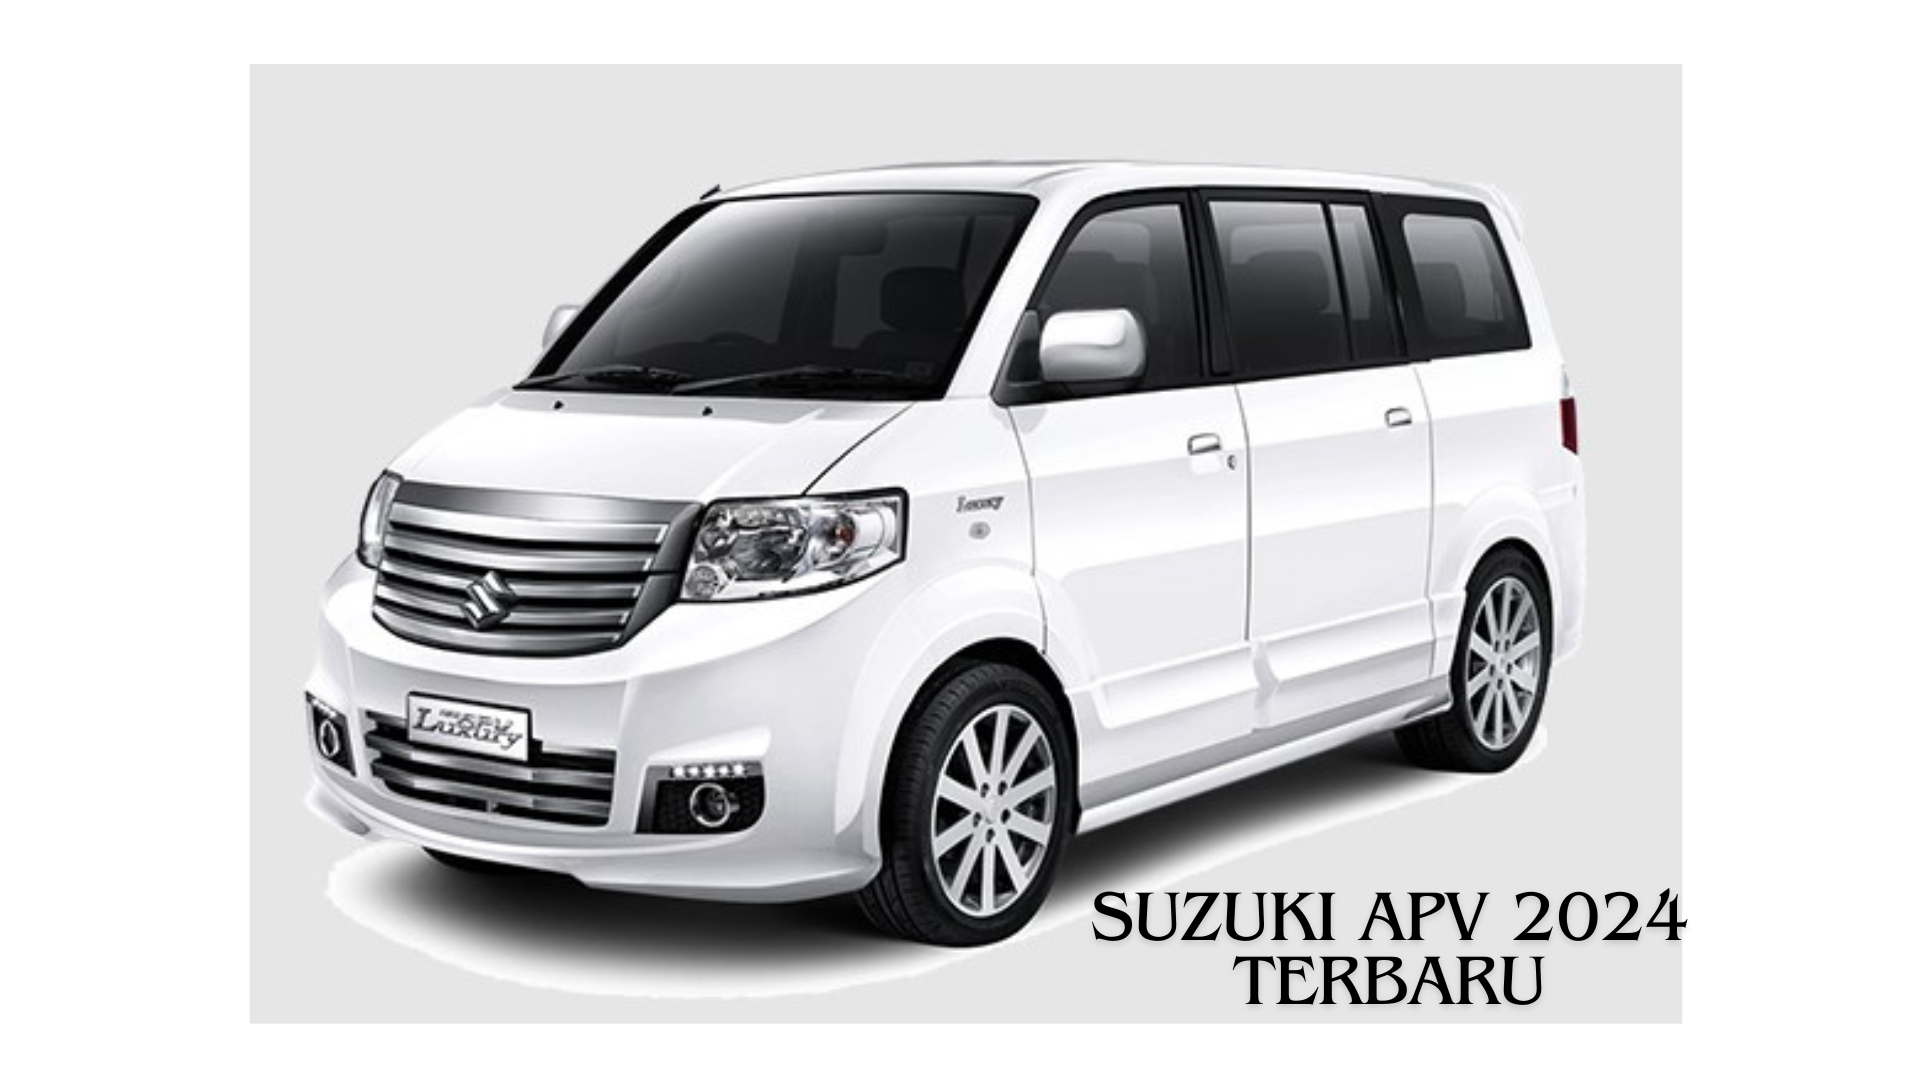 Suzuki APV 2024 Terbaru, Tampilan Makin Keren Mirip Mobil SUV